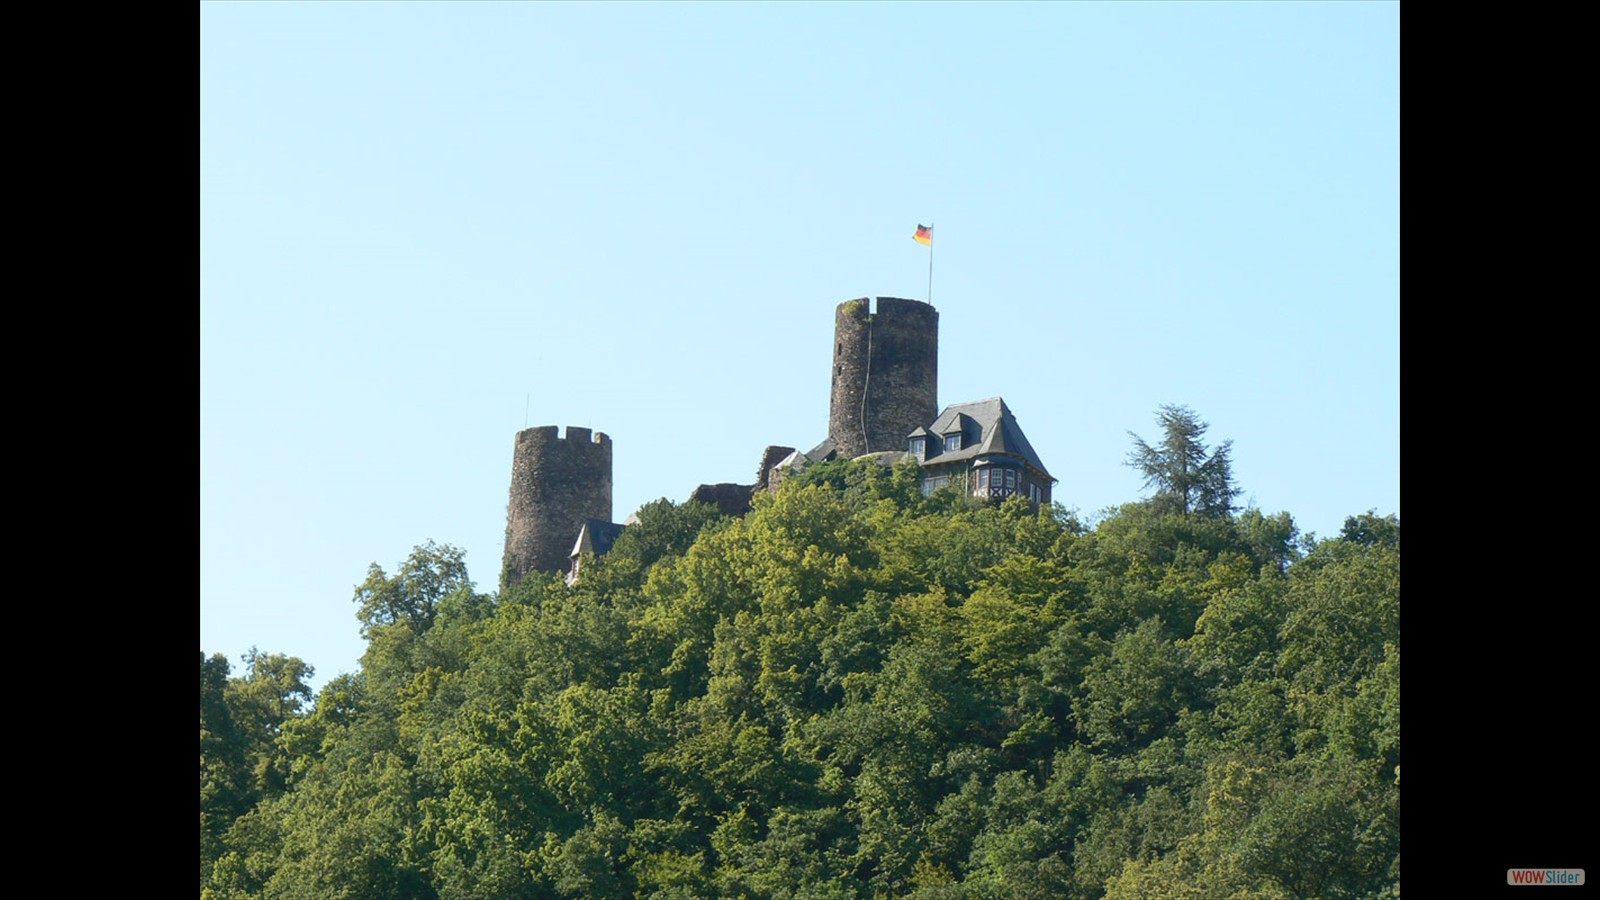 Burg Thurant.